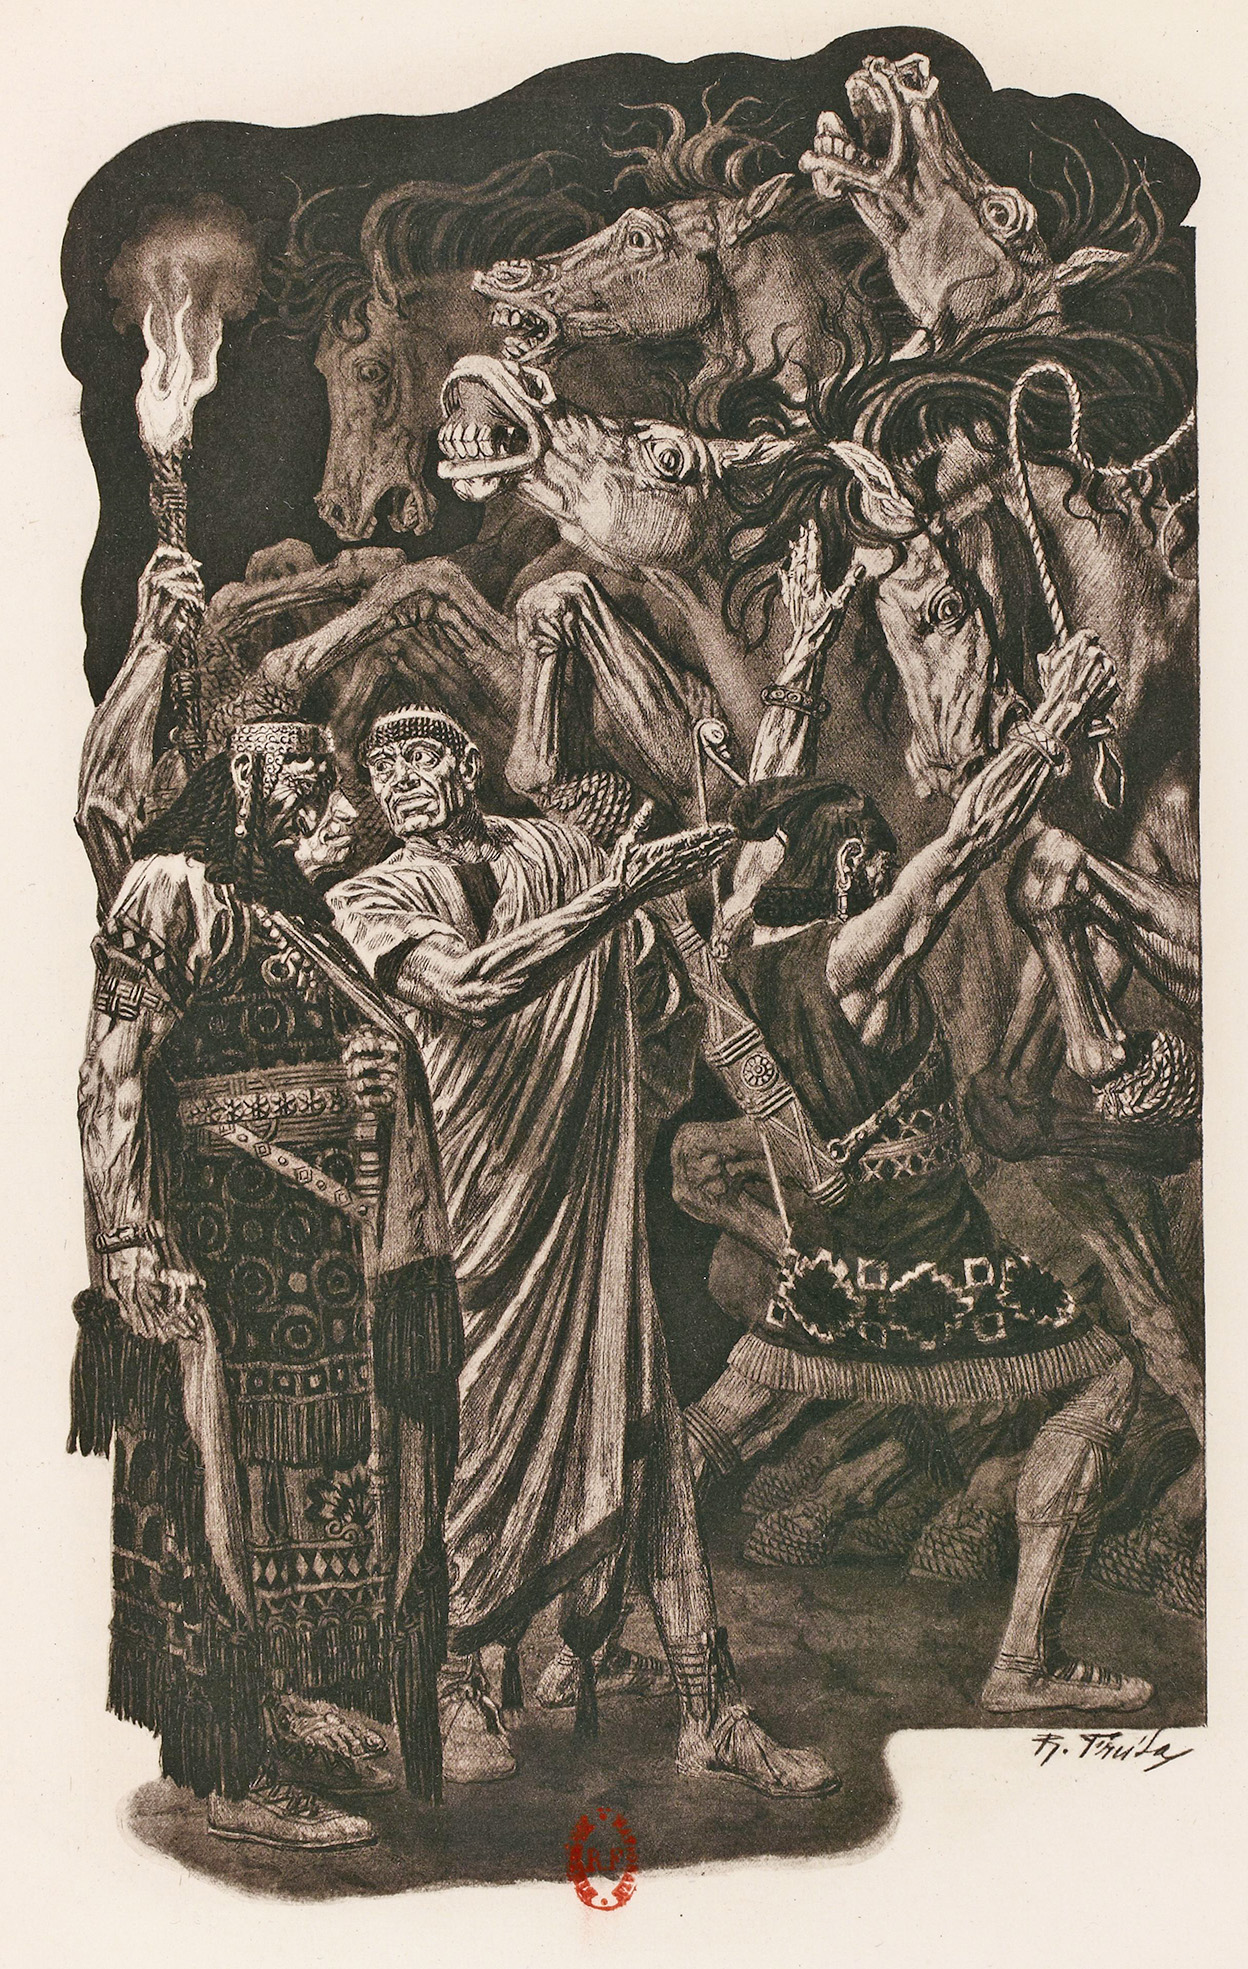 Illustrations de Raphaël Freida dans Hérodias de Gustave Flaubert
1926 - Gallica ark:/12148/bpt6k15241290